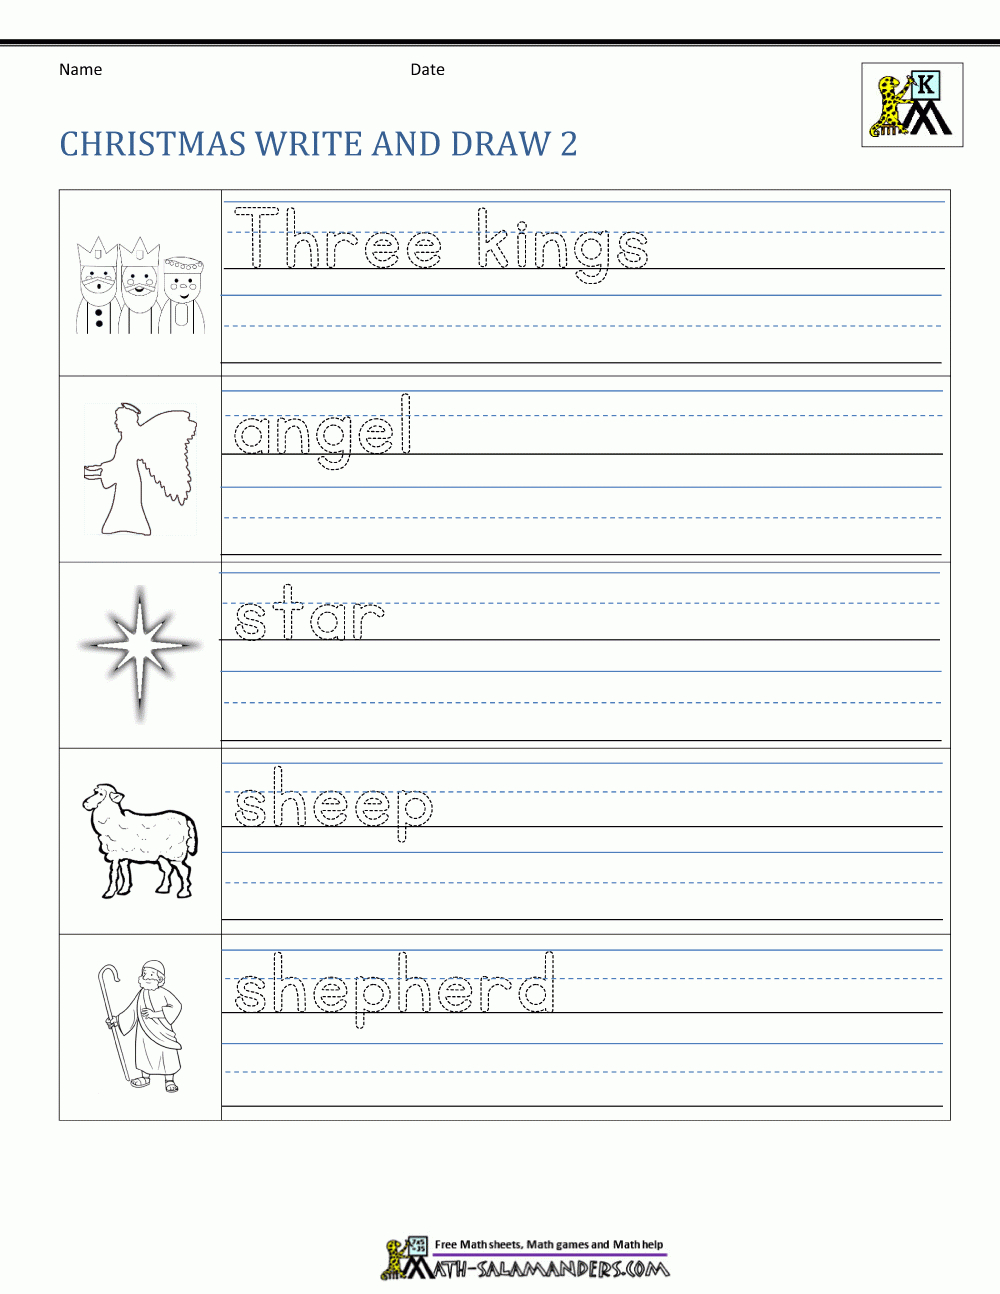 Free Christmas Worksheets For Kids | Christmas Writing Worksheets Printables